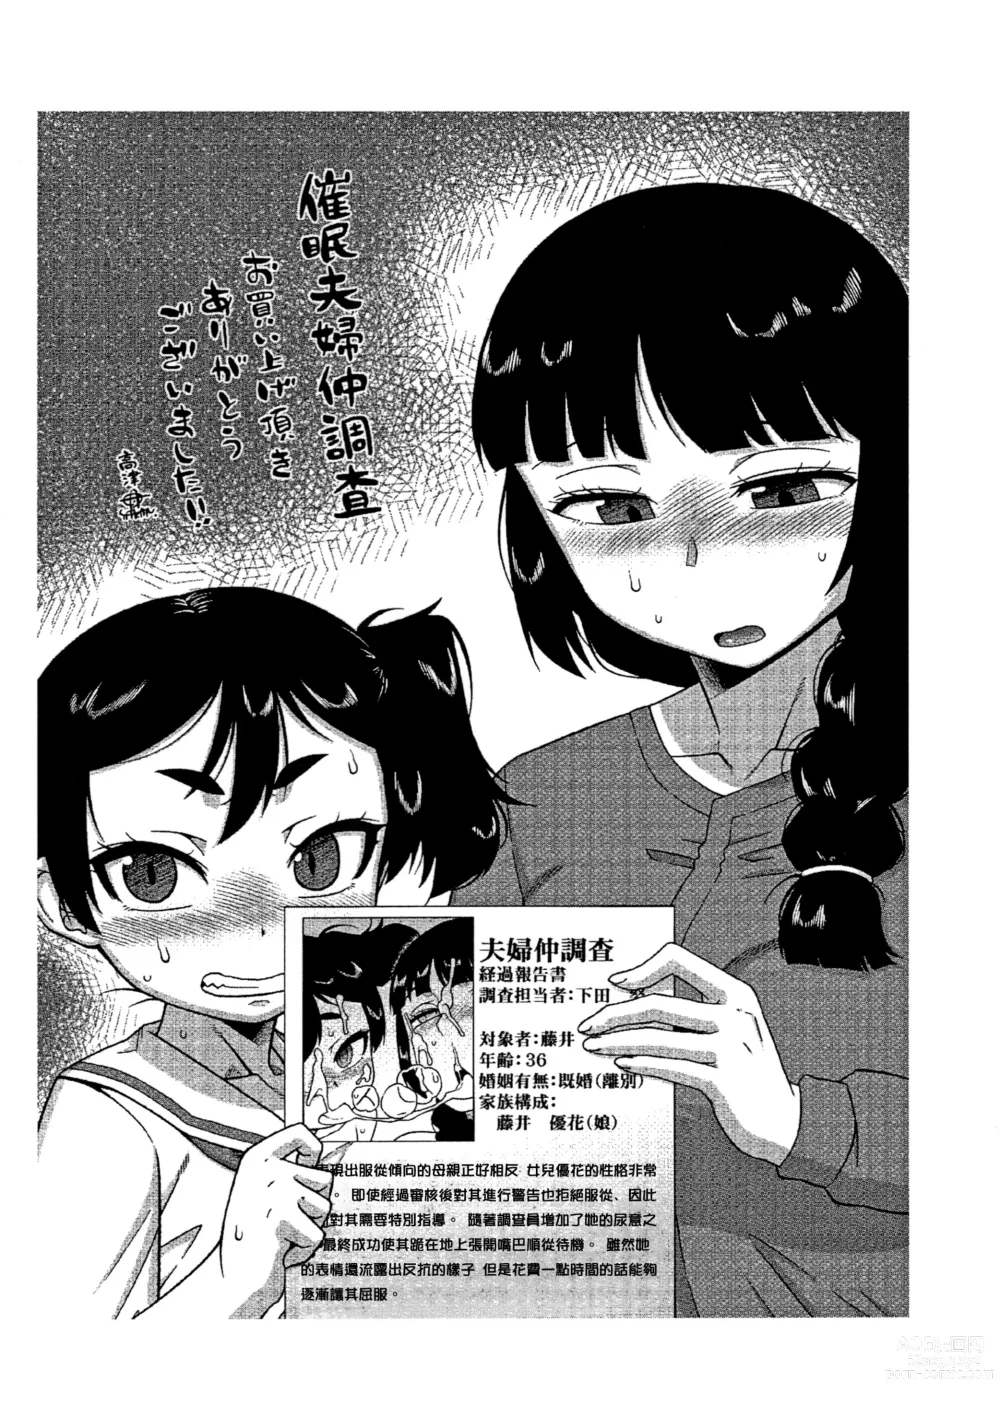 Page 201 of manga 催眠夫婦仲調査